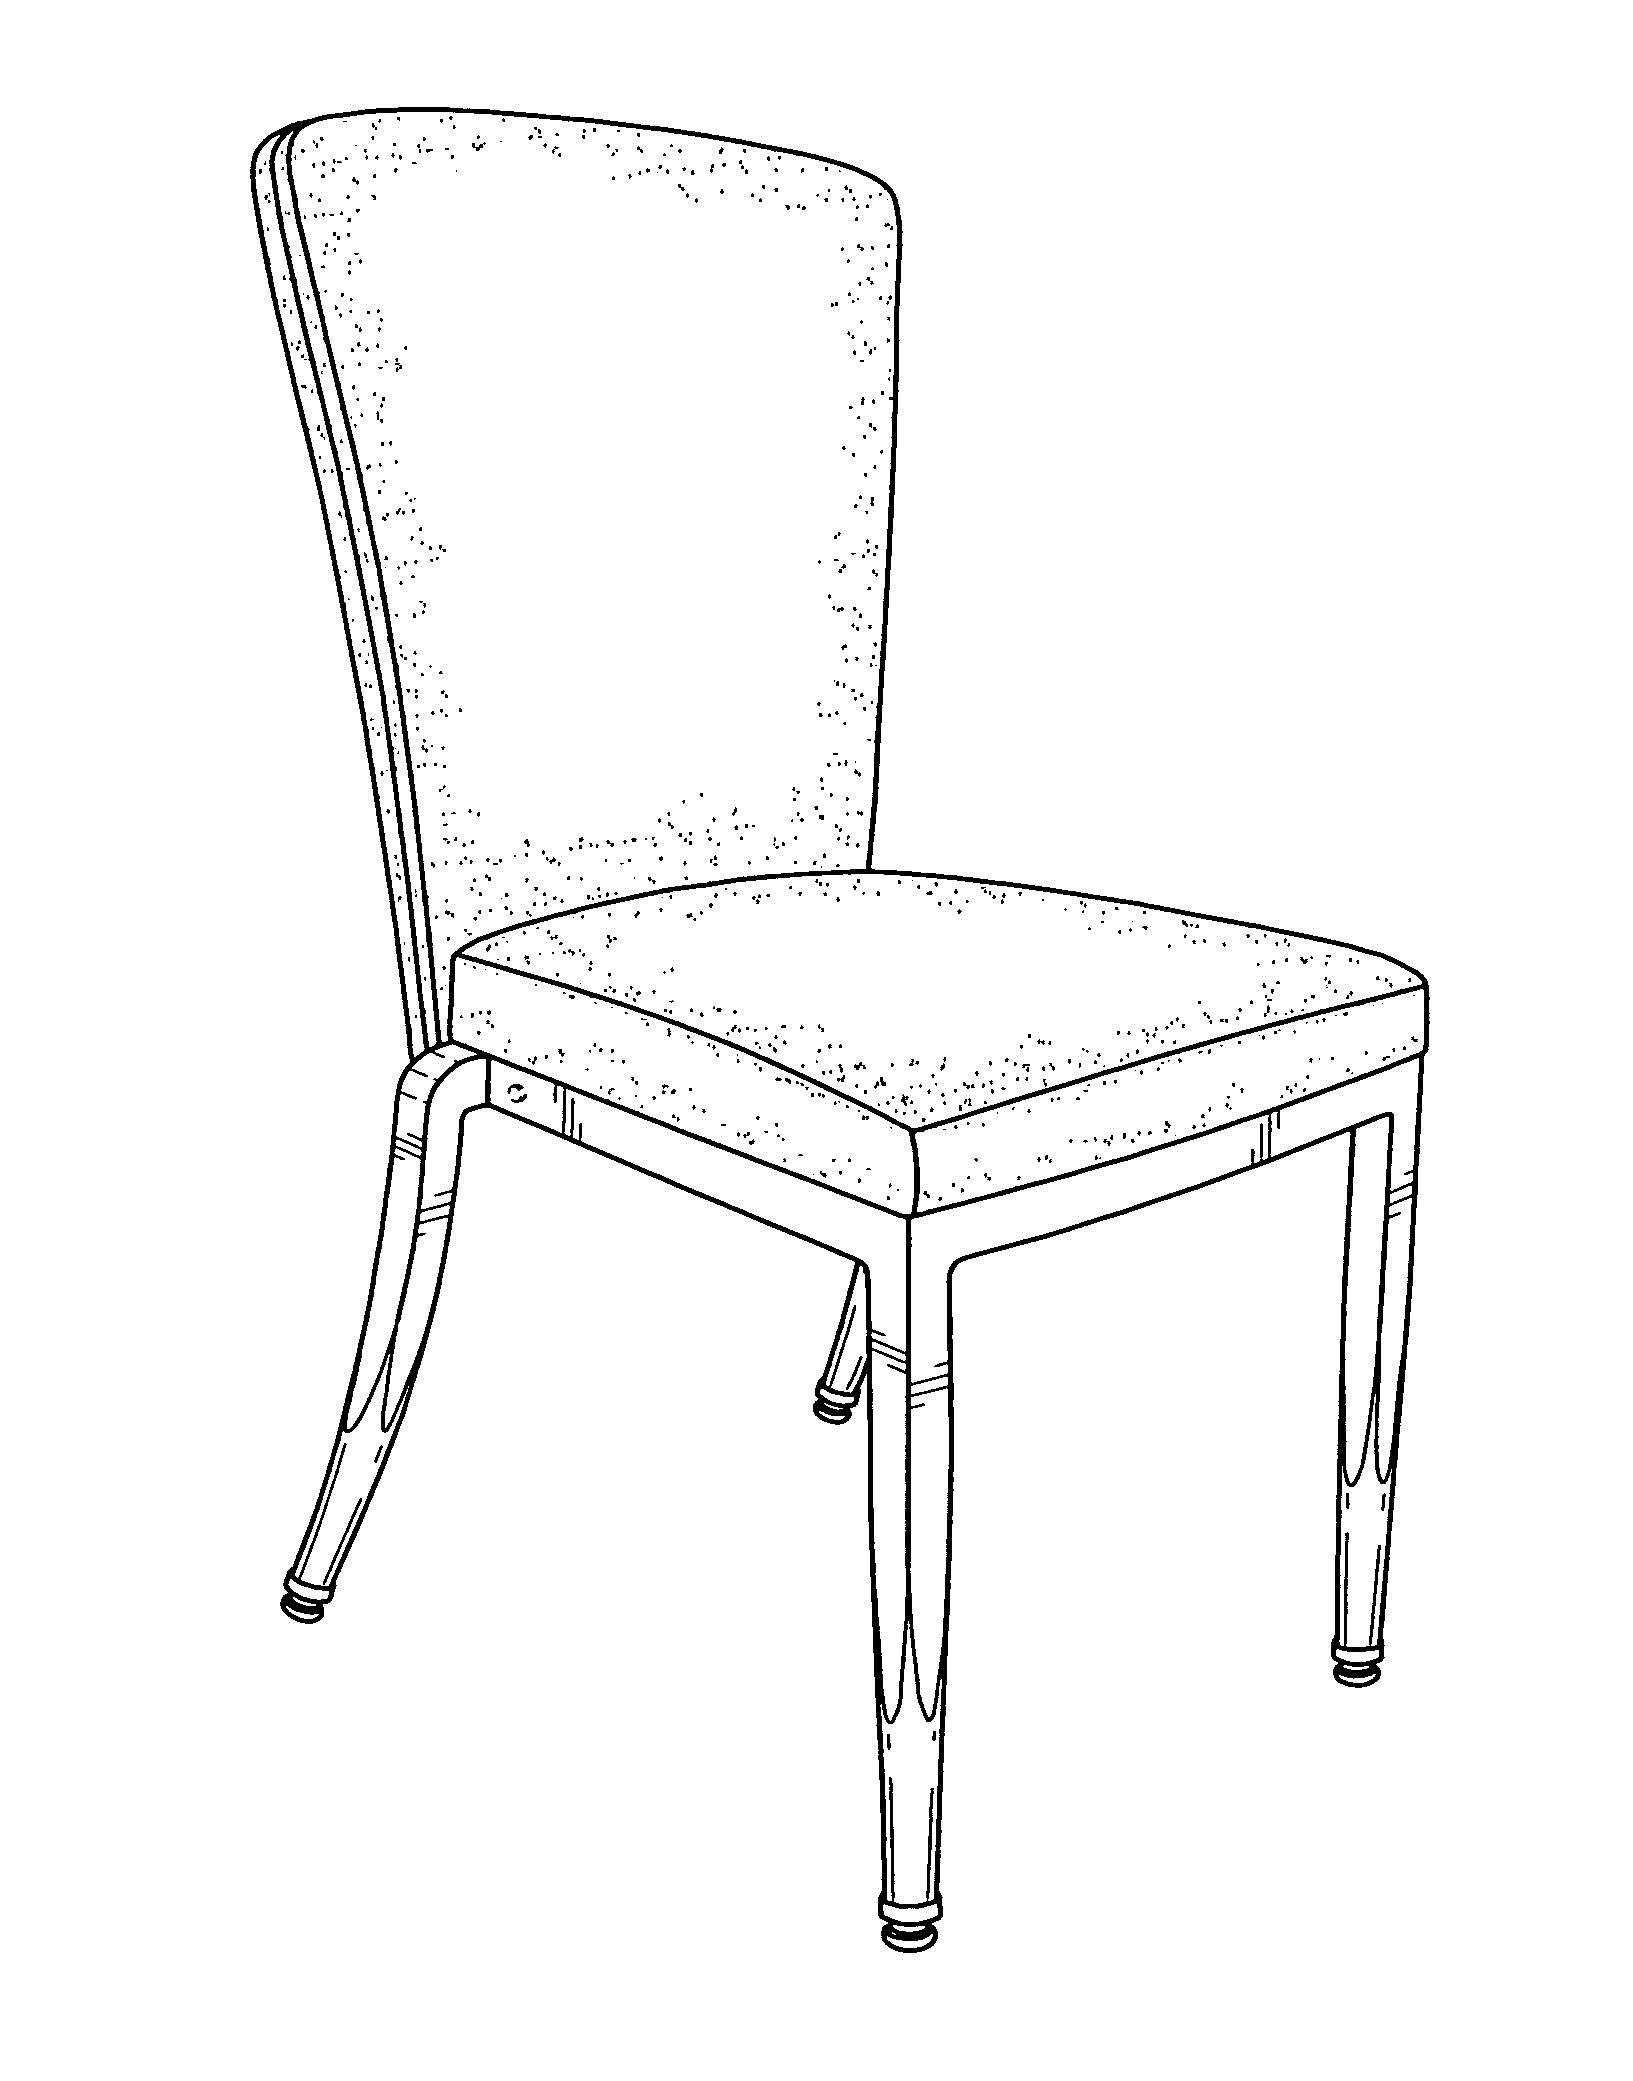 Рисунок для спинки стула